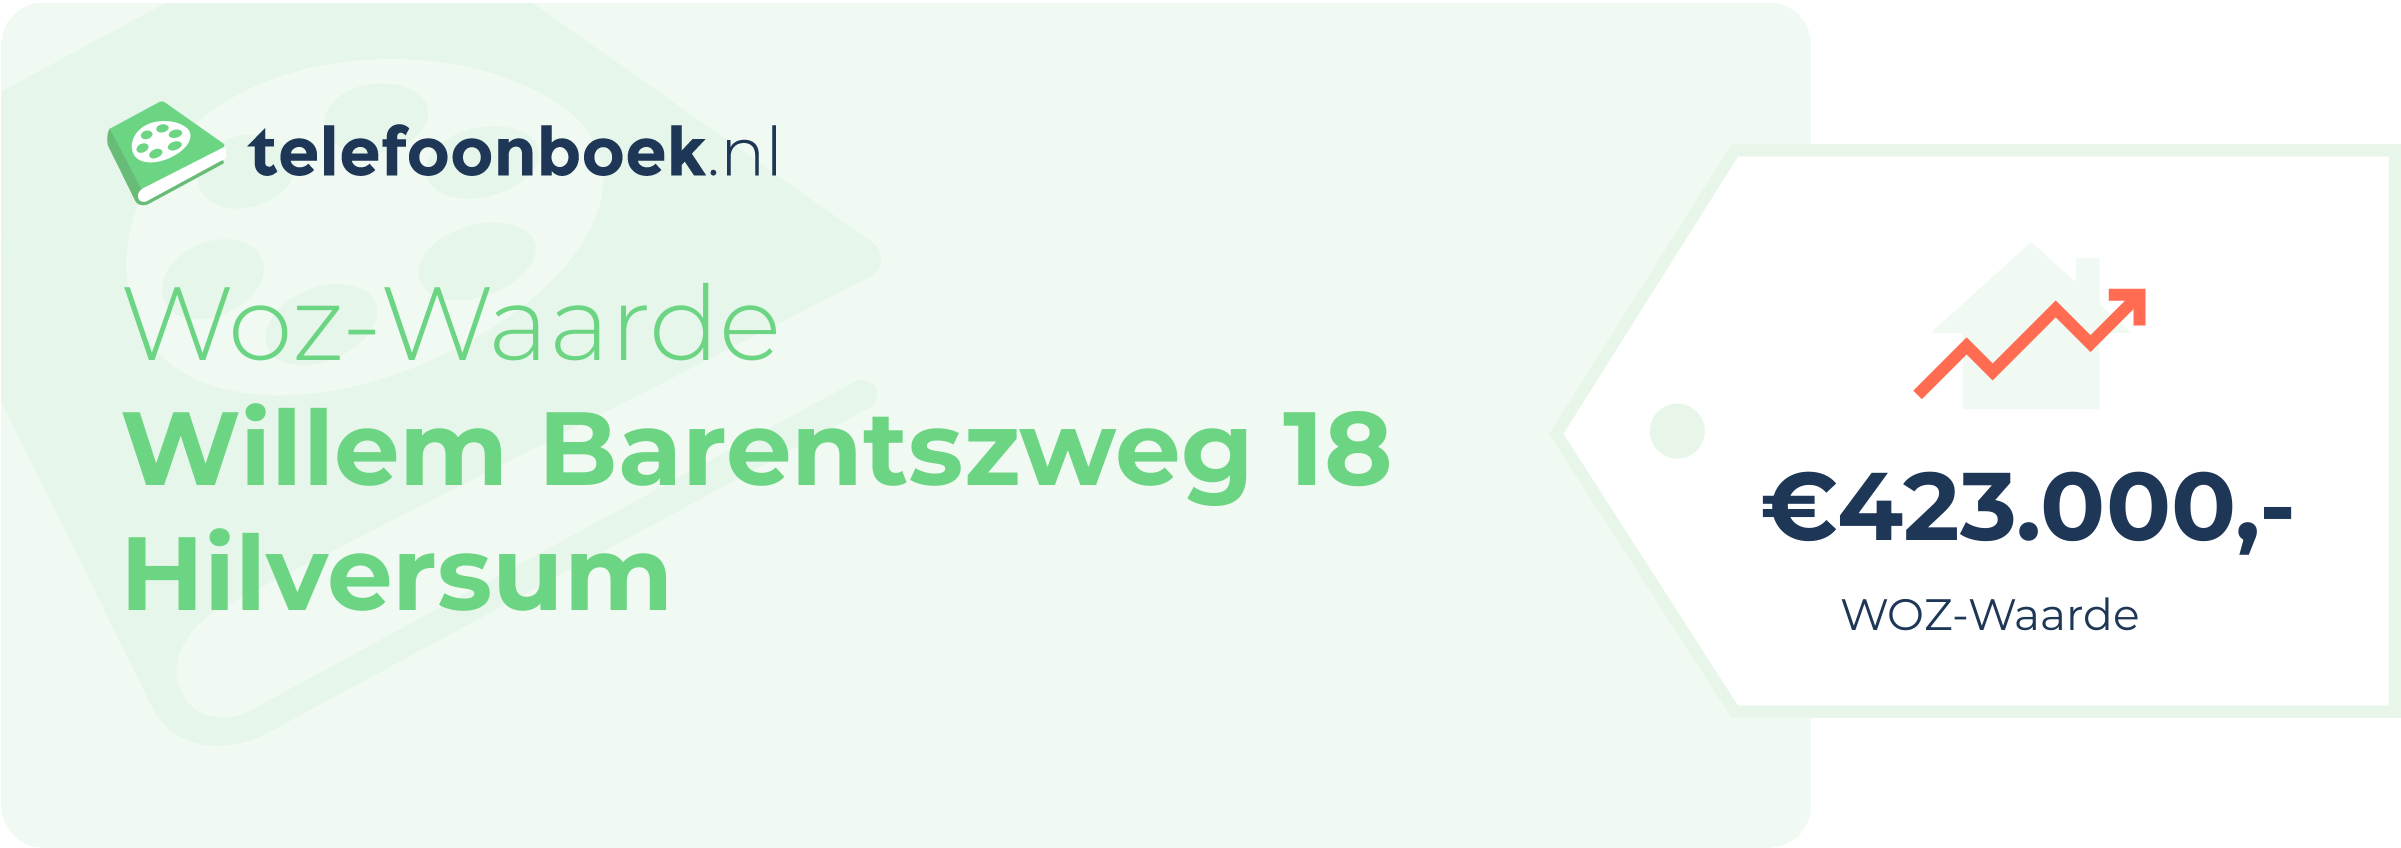 WOZ-waarde Willem Barentszweg 18 Hilversum